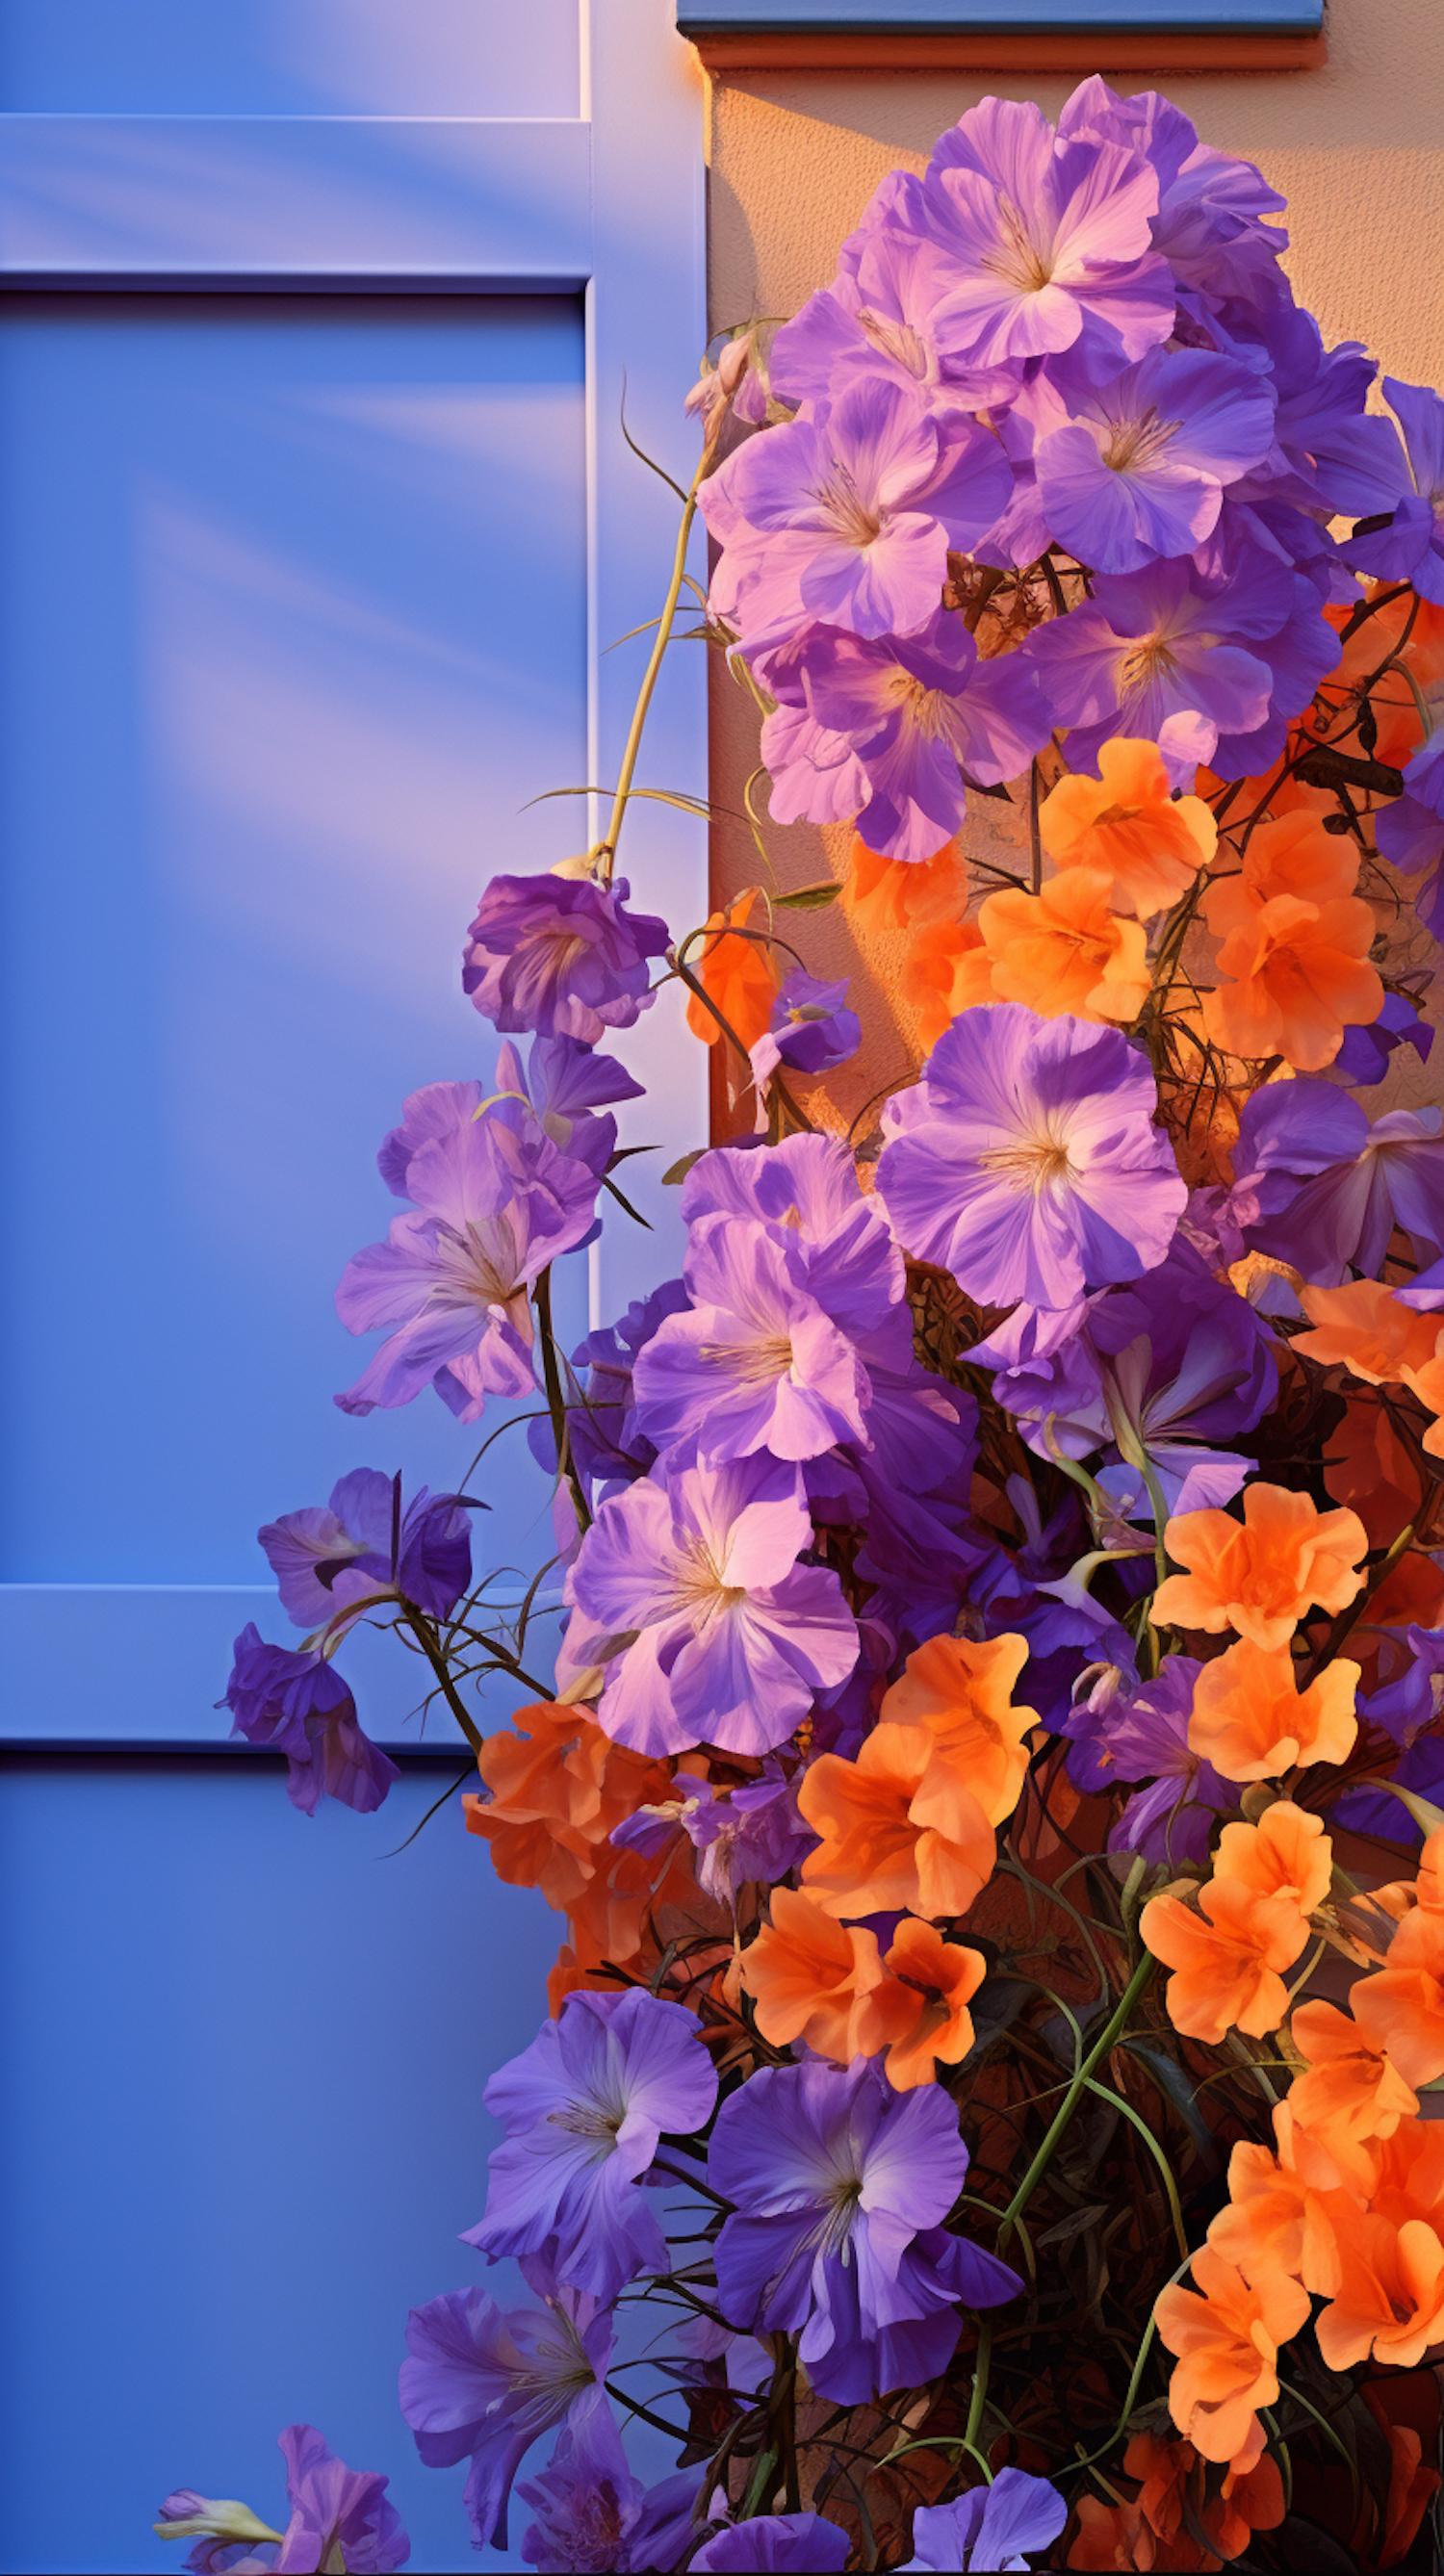 Lilac and Orange Petunias against Blue